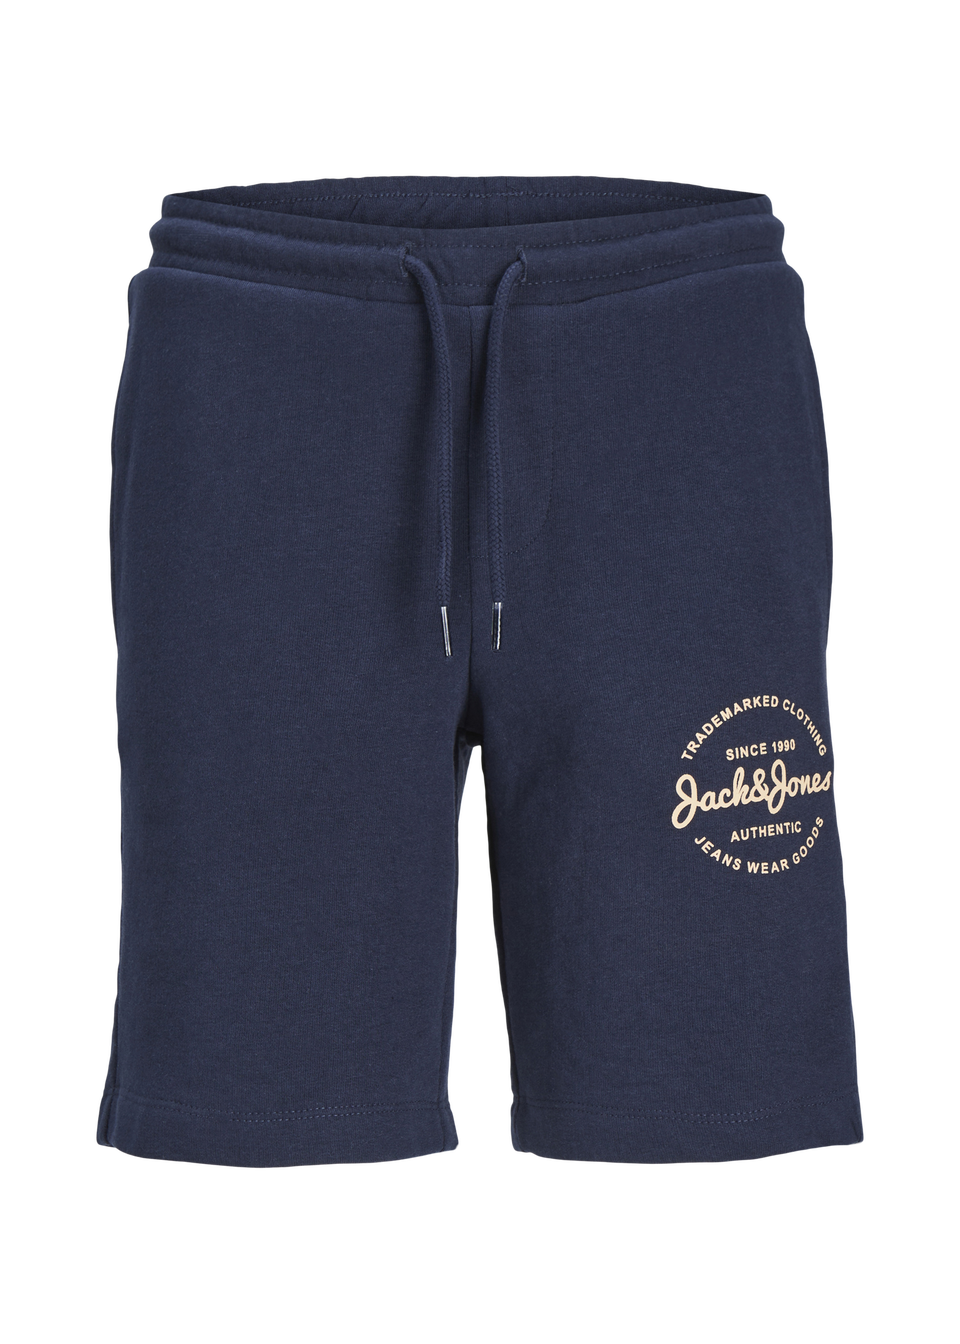 Jack & Jones Boys Navy T-Shirt & Shorts Set (6-16yrs)